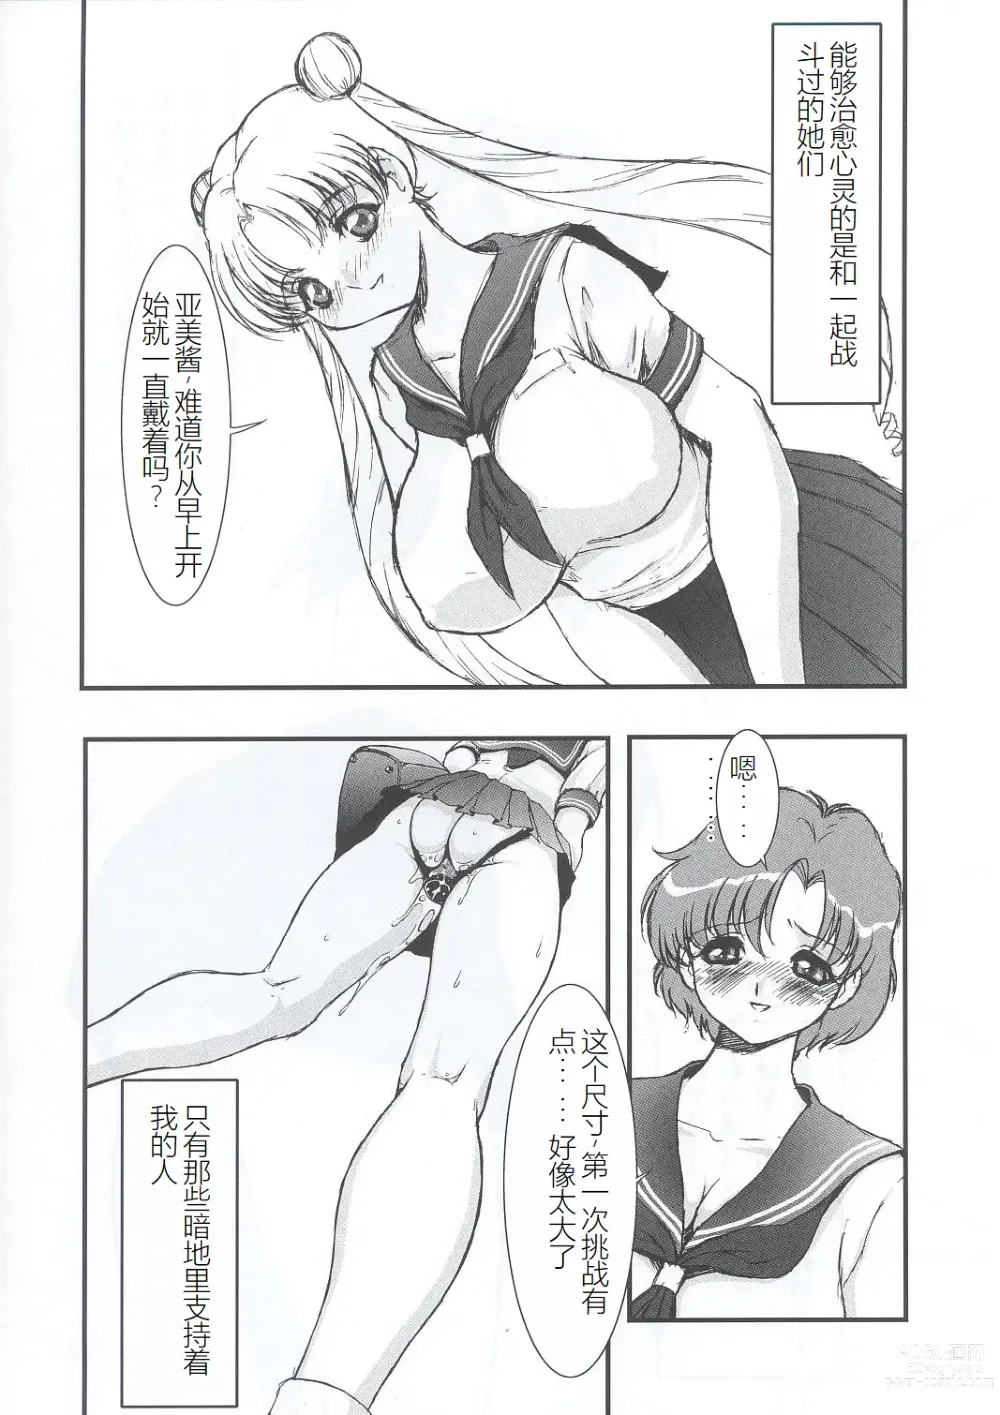 Page 9 of doujinshi SM